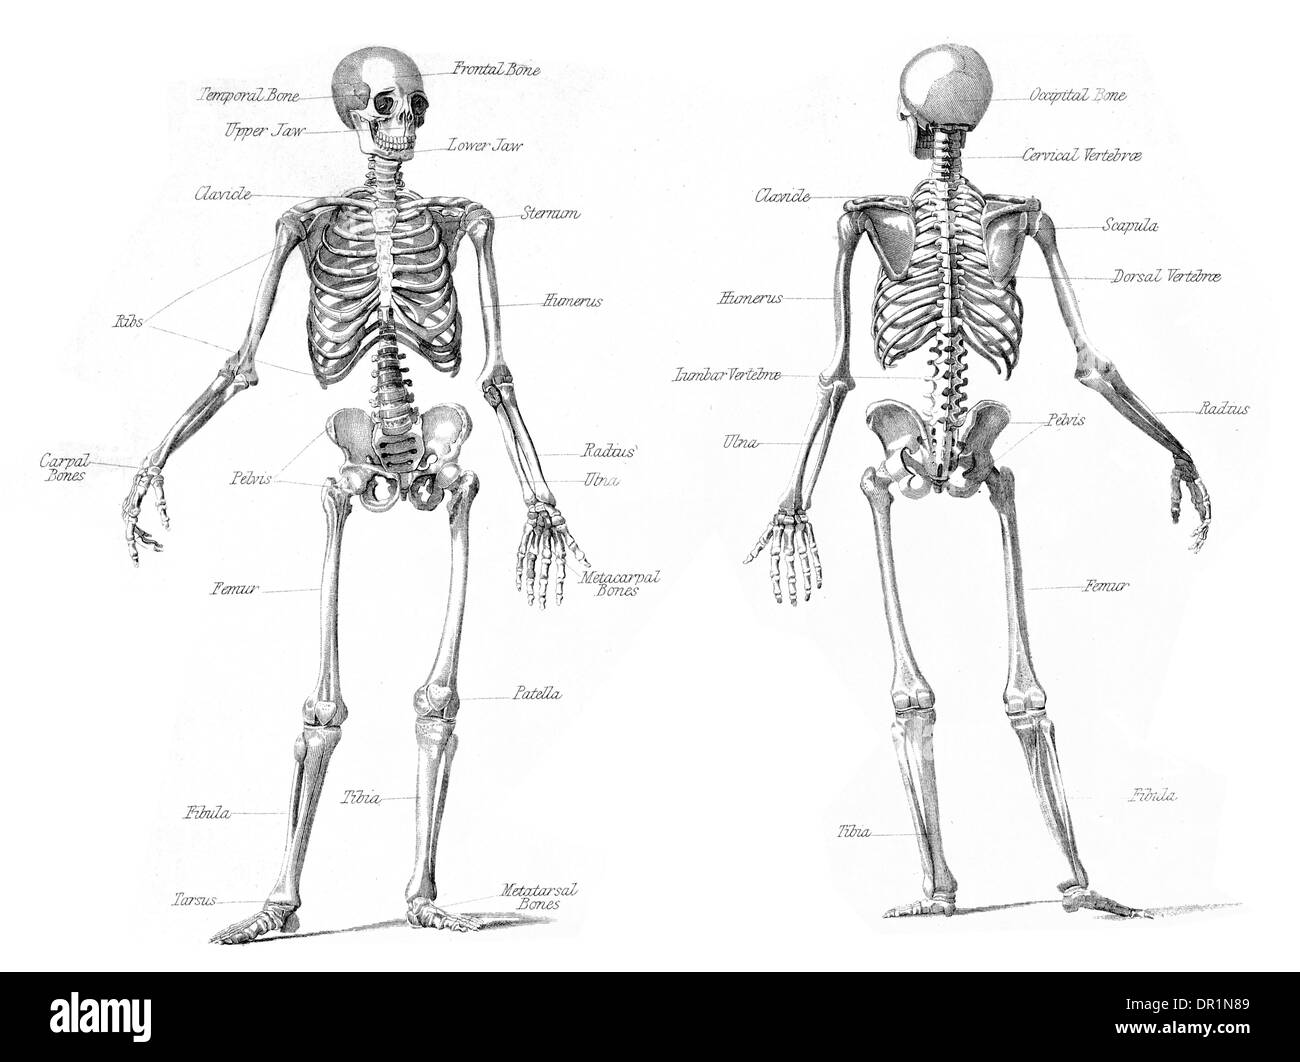 Anatomy and Physiology Human Skeleton Stock Photo